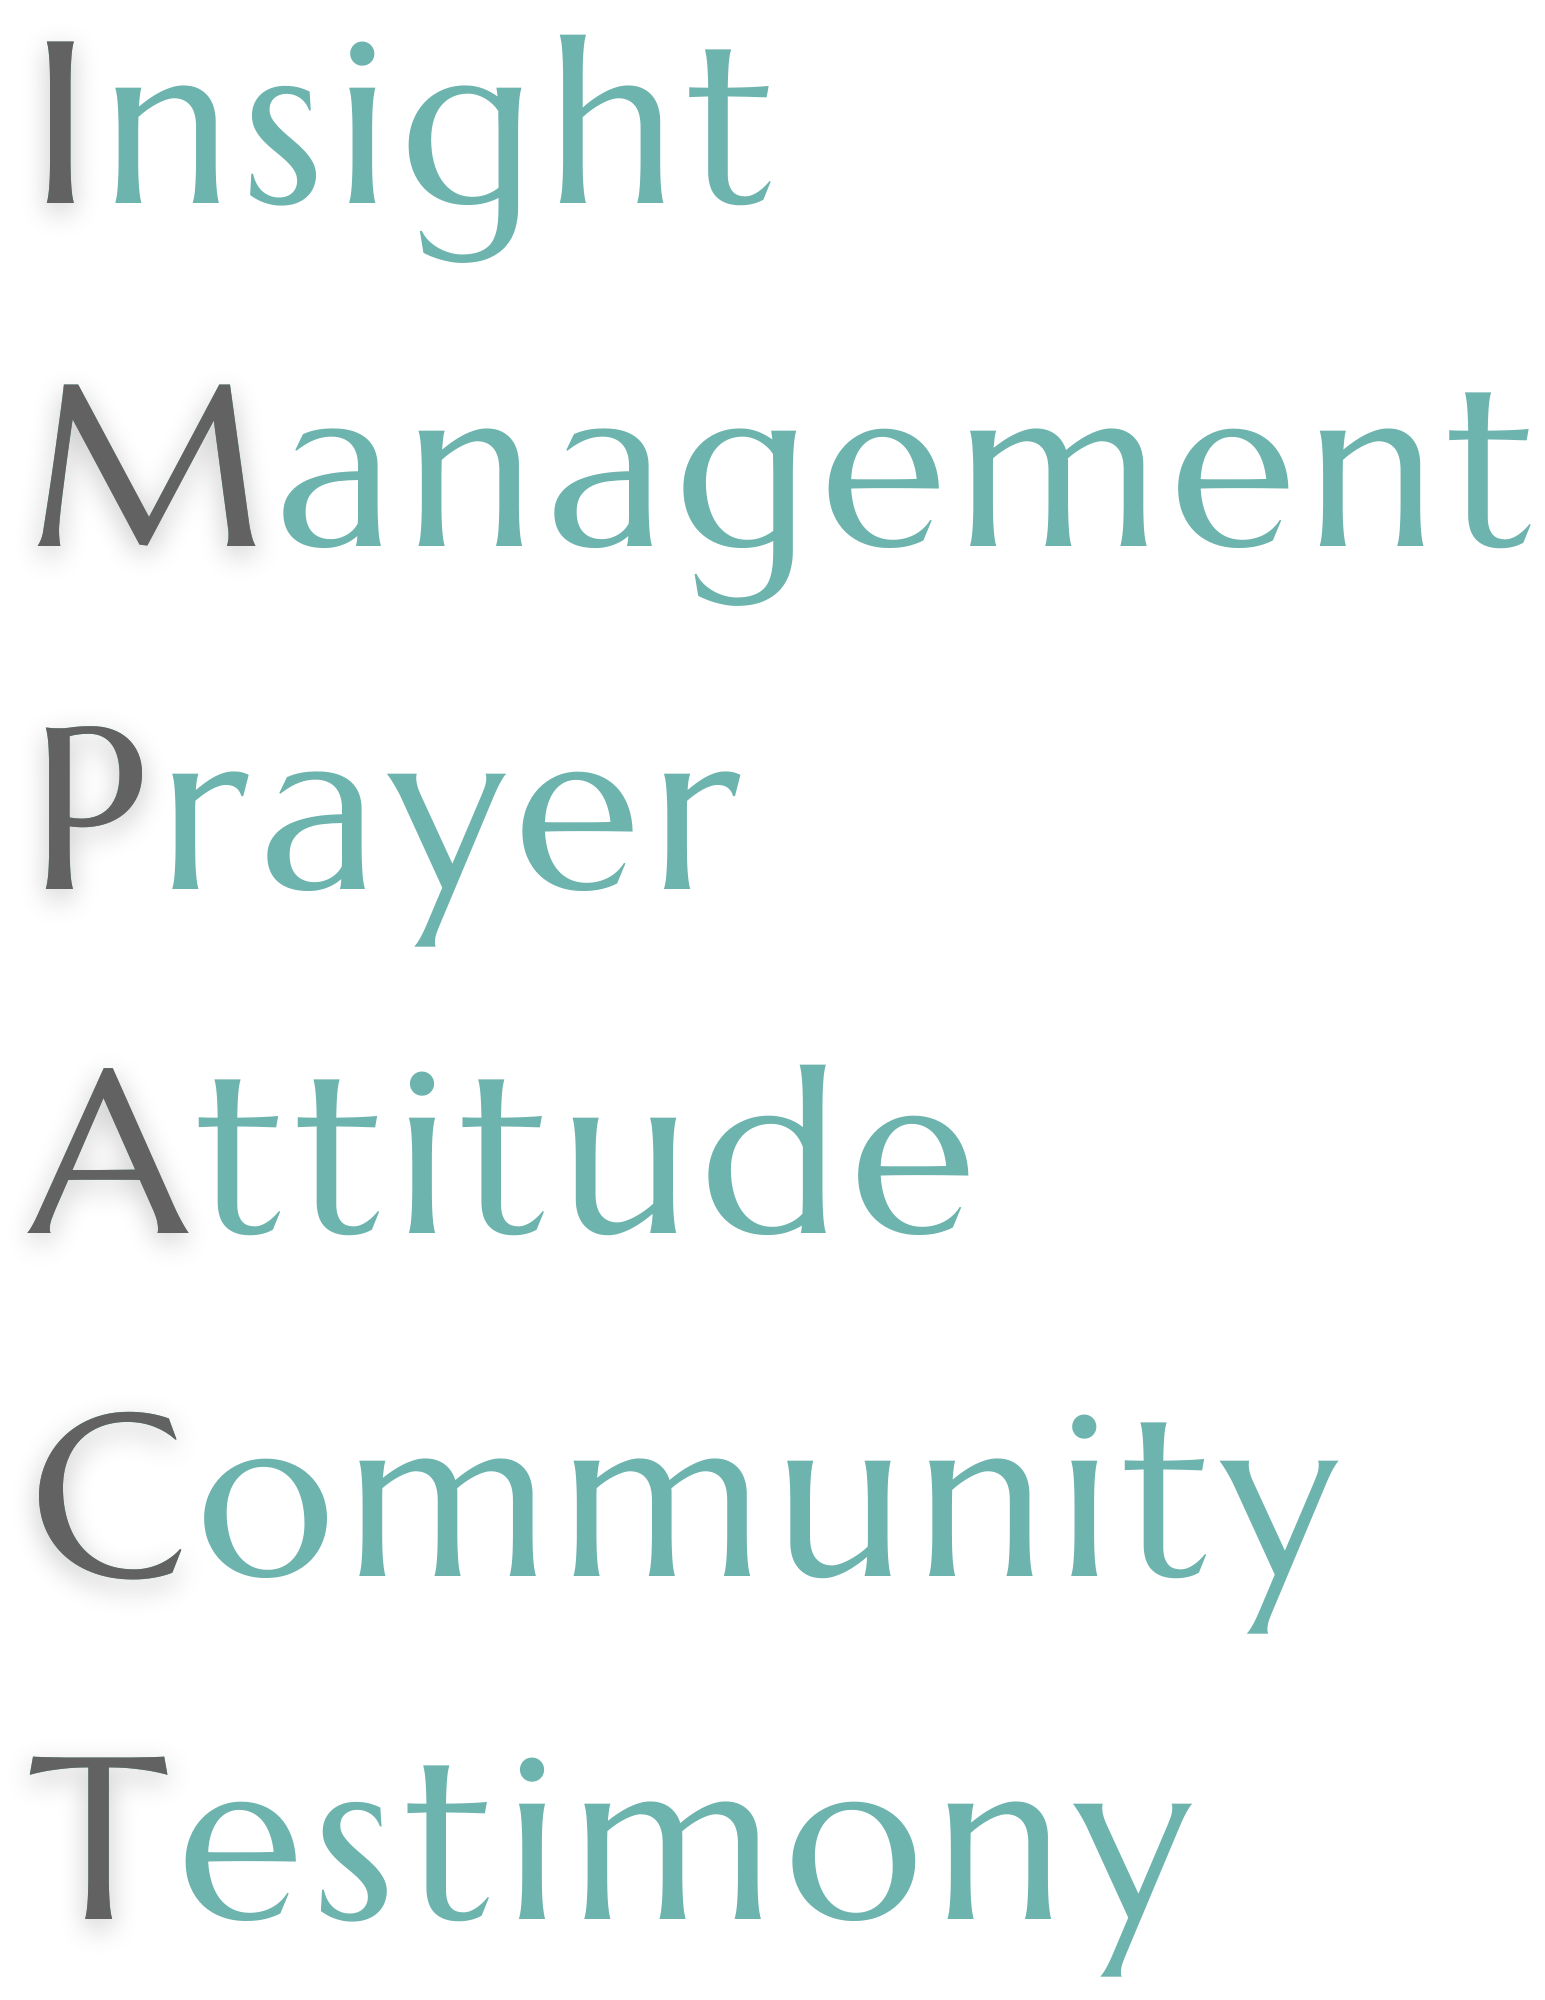 Insight, Management, Prayer, Attitude, Community, Testimony = Impact